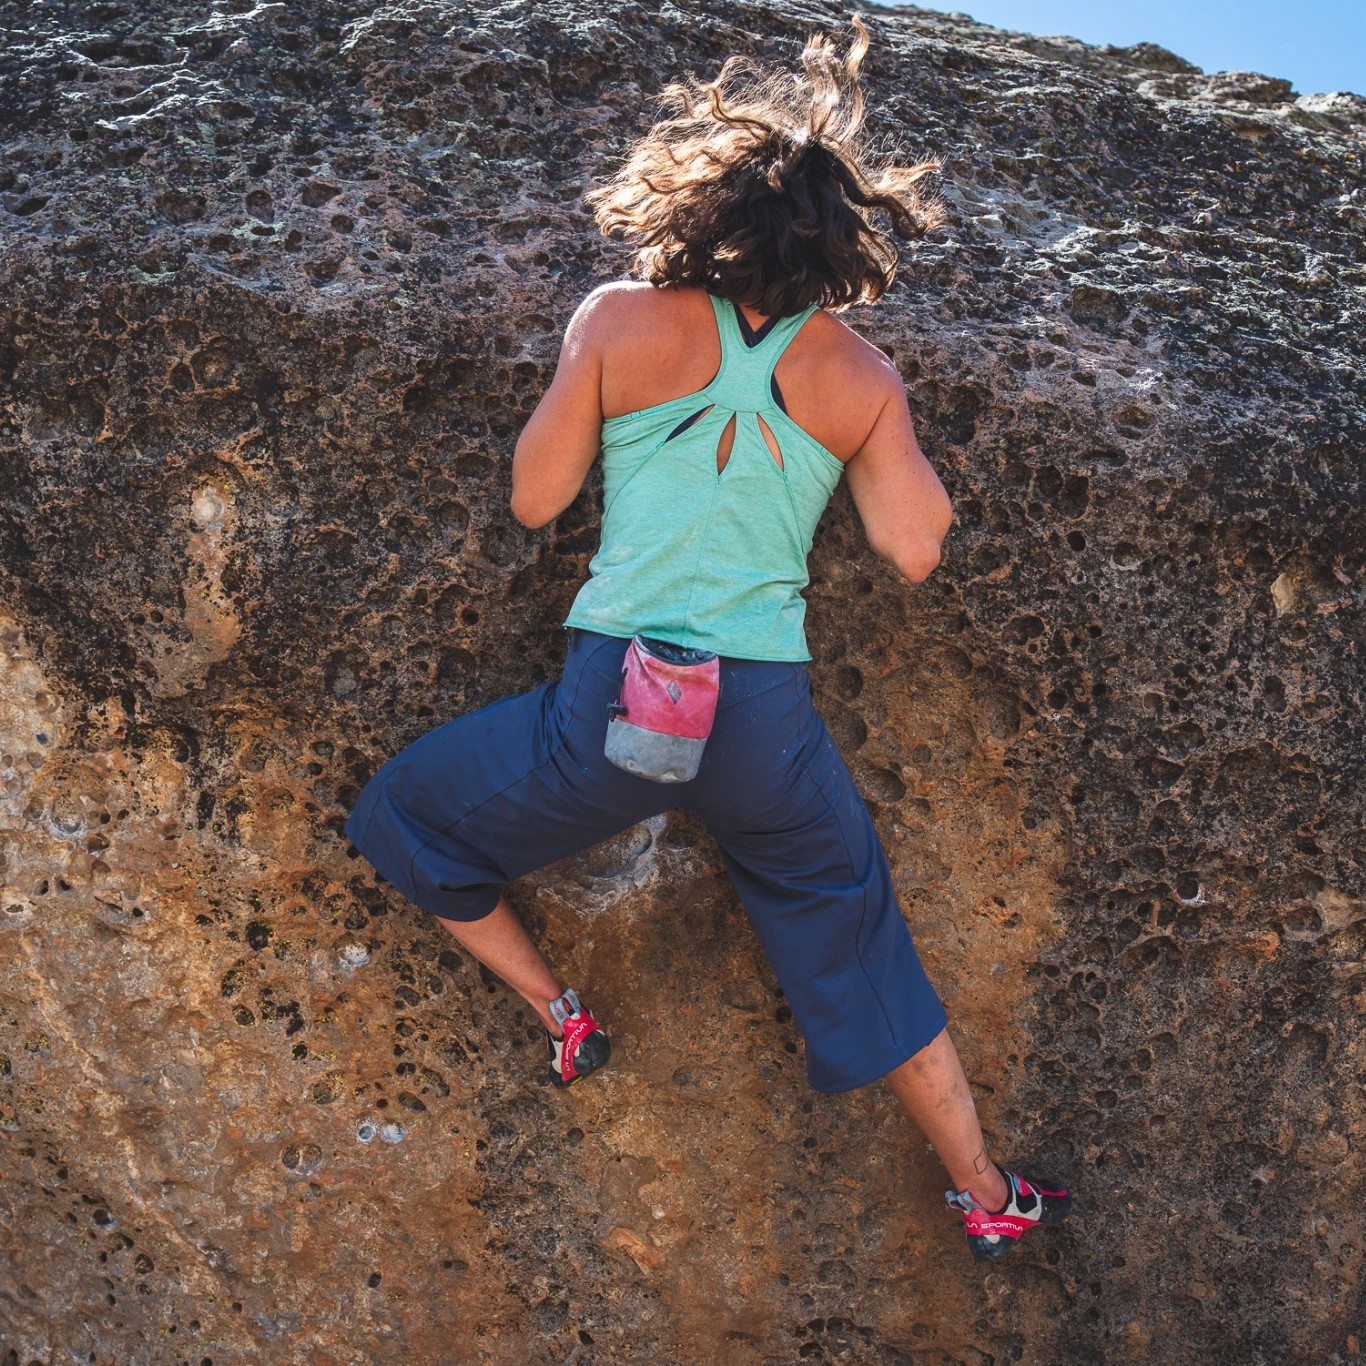 La Sportiva Women's Solution Comp Rock Climbing Shoe